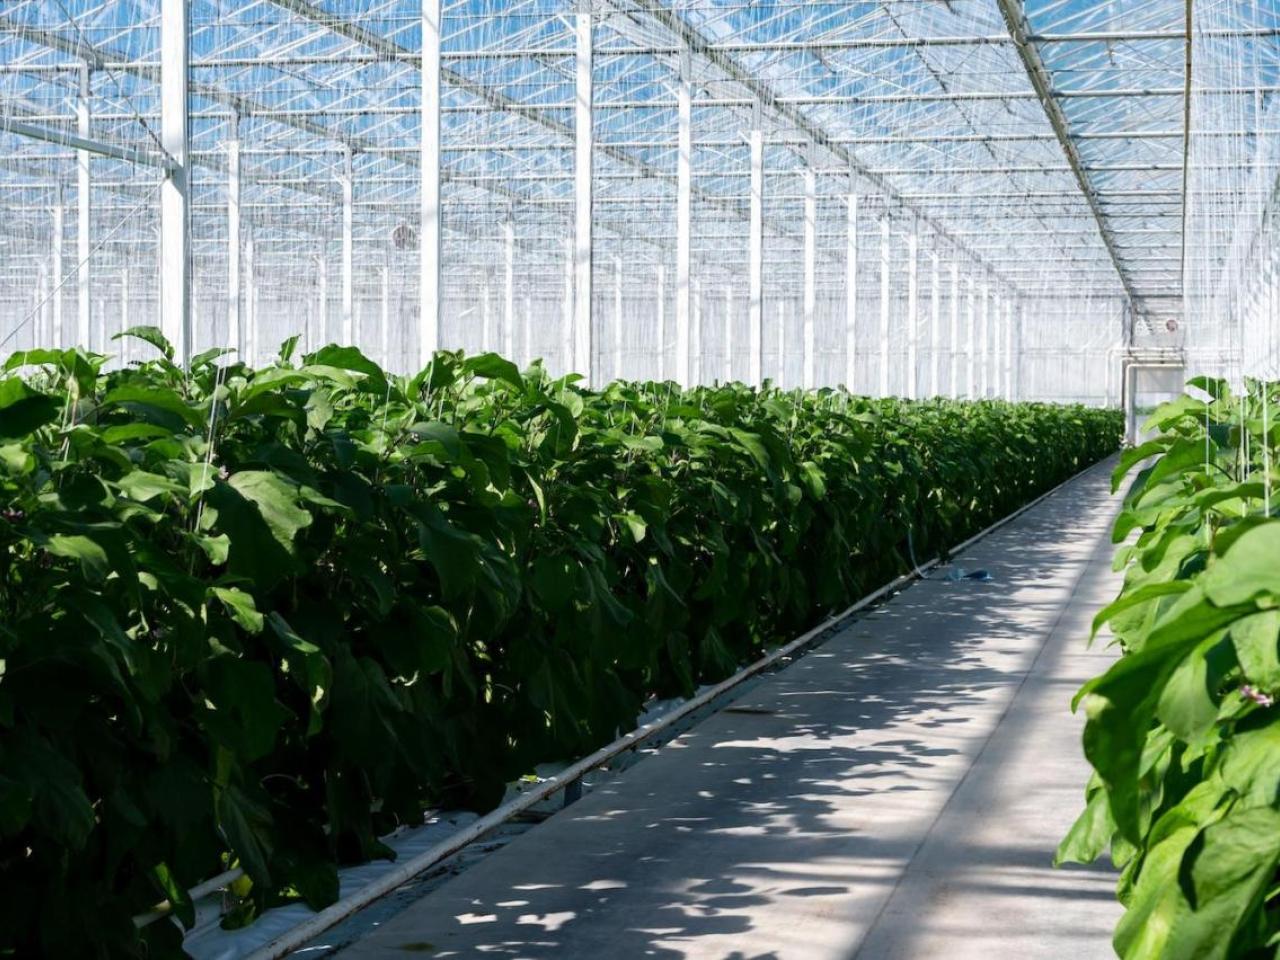 Inside a greenhouse farm